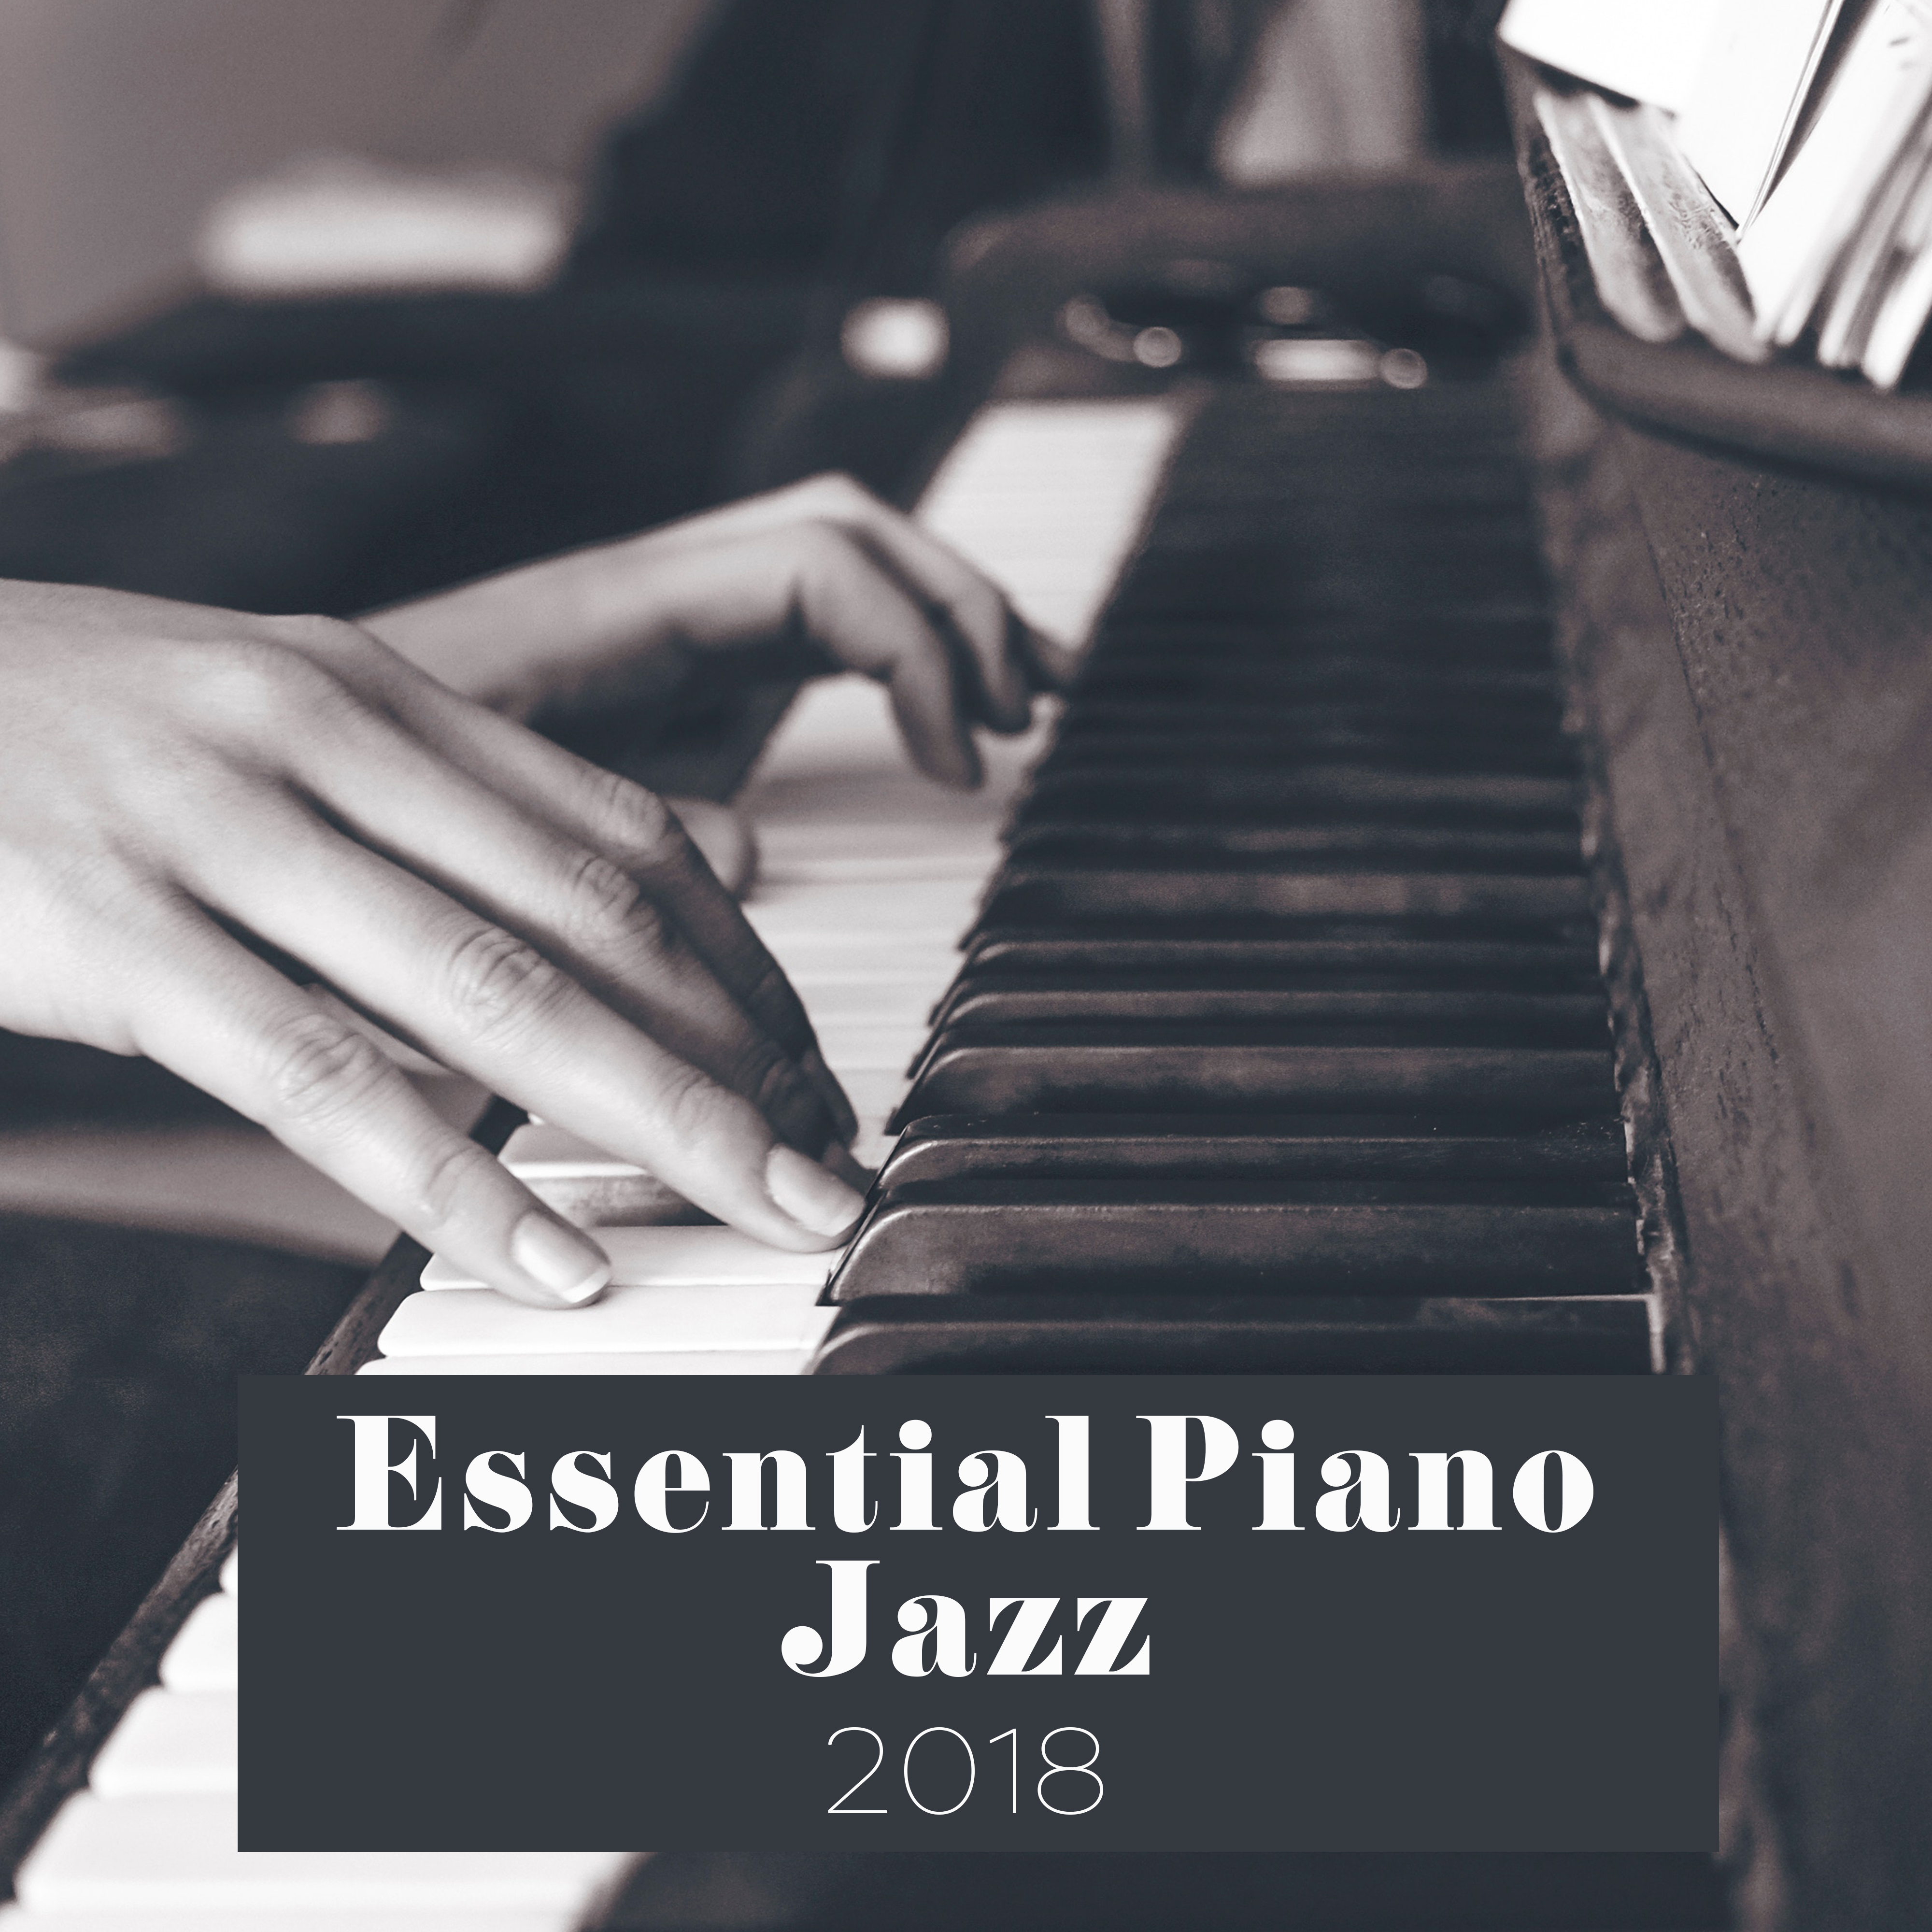 Essential Piano Jazz 2018